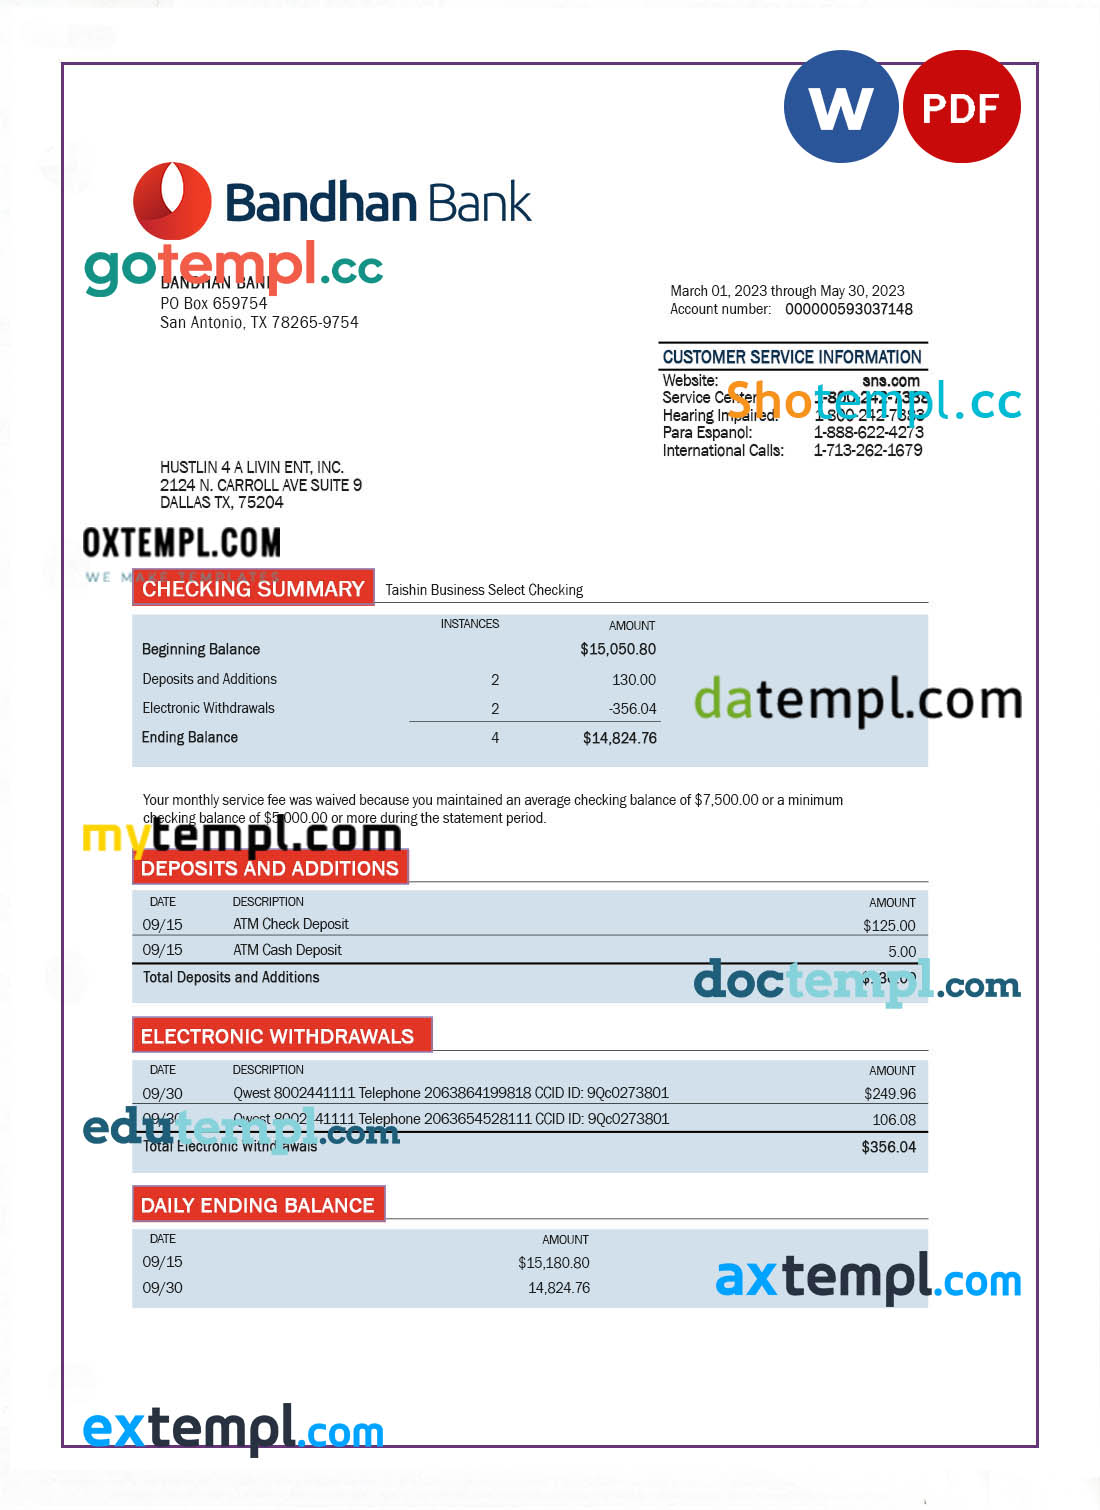 Burkina Faso Atlantique bank mastercard credit card template in PSD format, fully editable